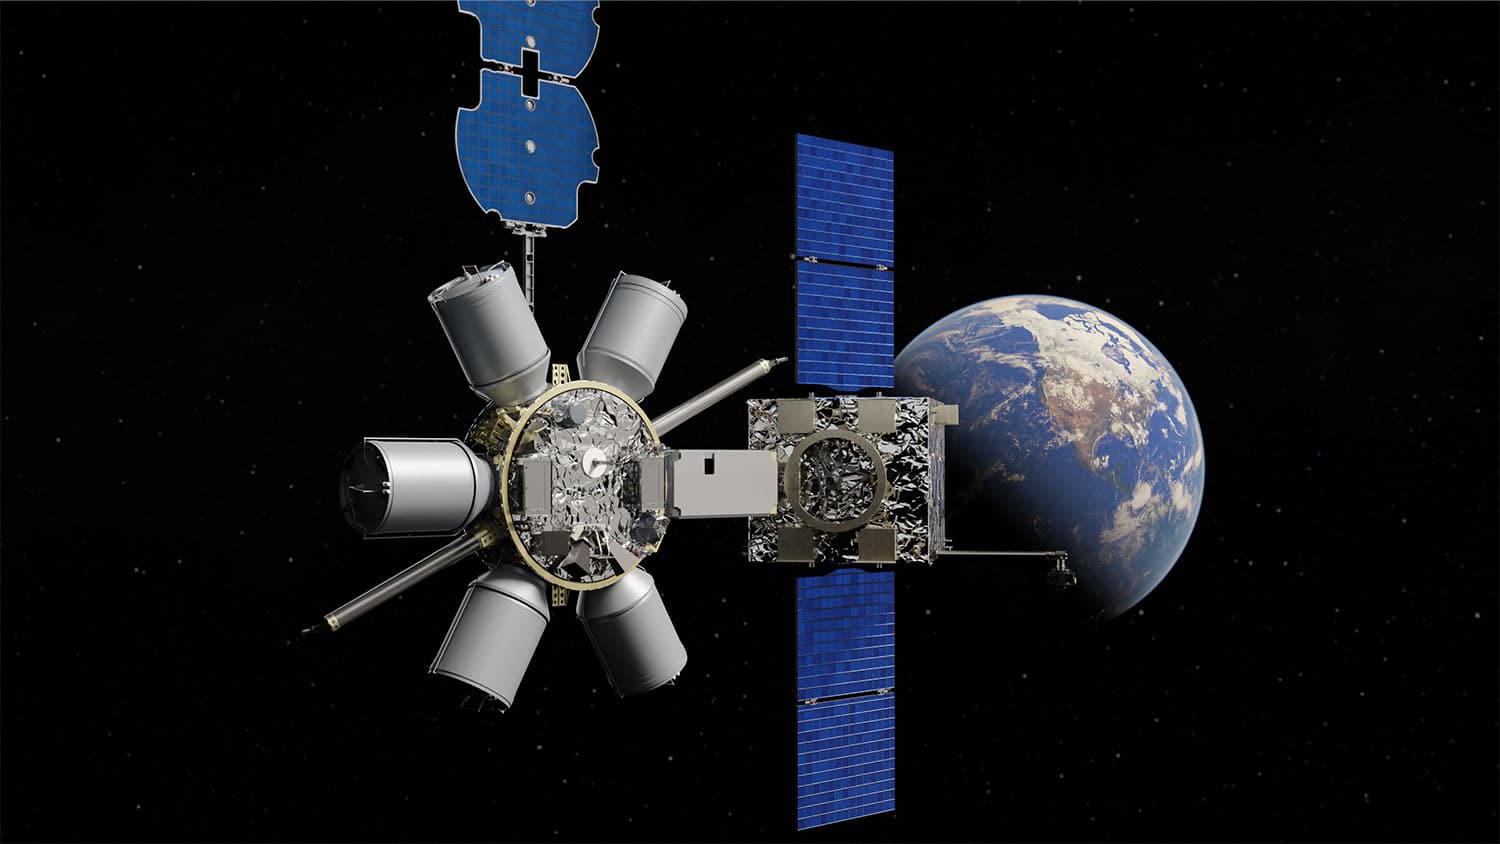 Northrop Grumman’s GAS-T design will leverage an ESPAStar-D satellite platform to add fuel and extend the life of in-orbit assets.